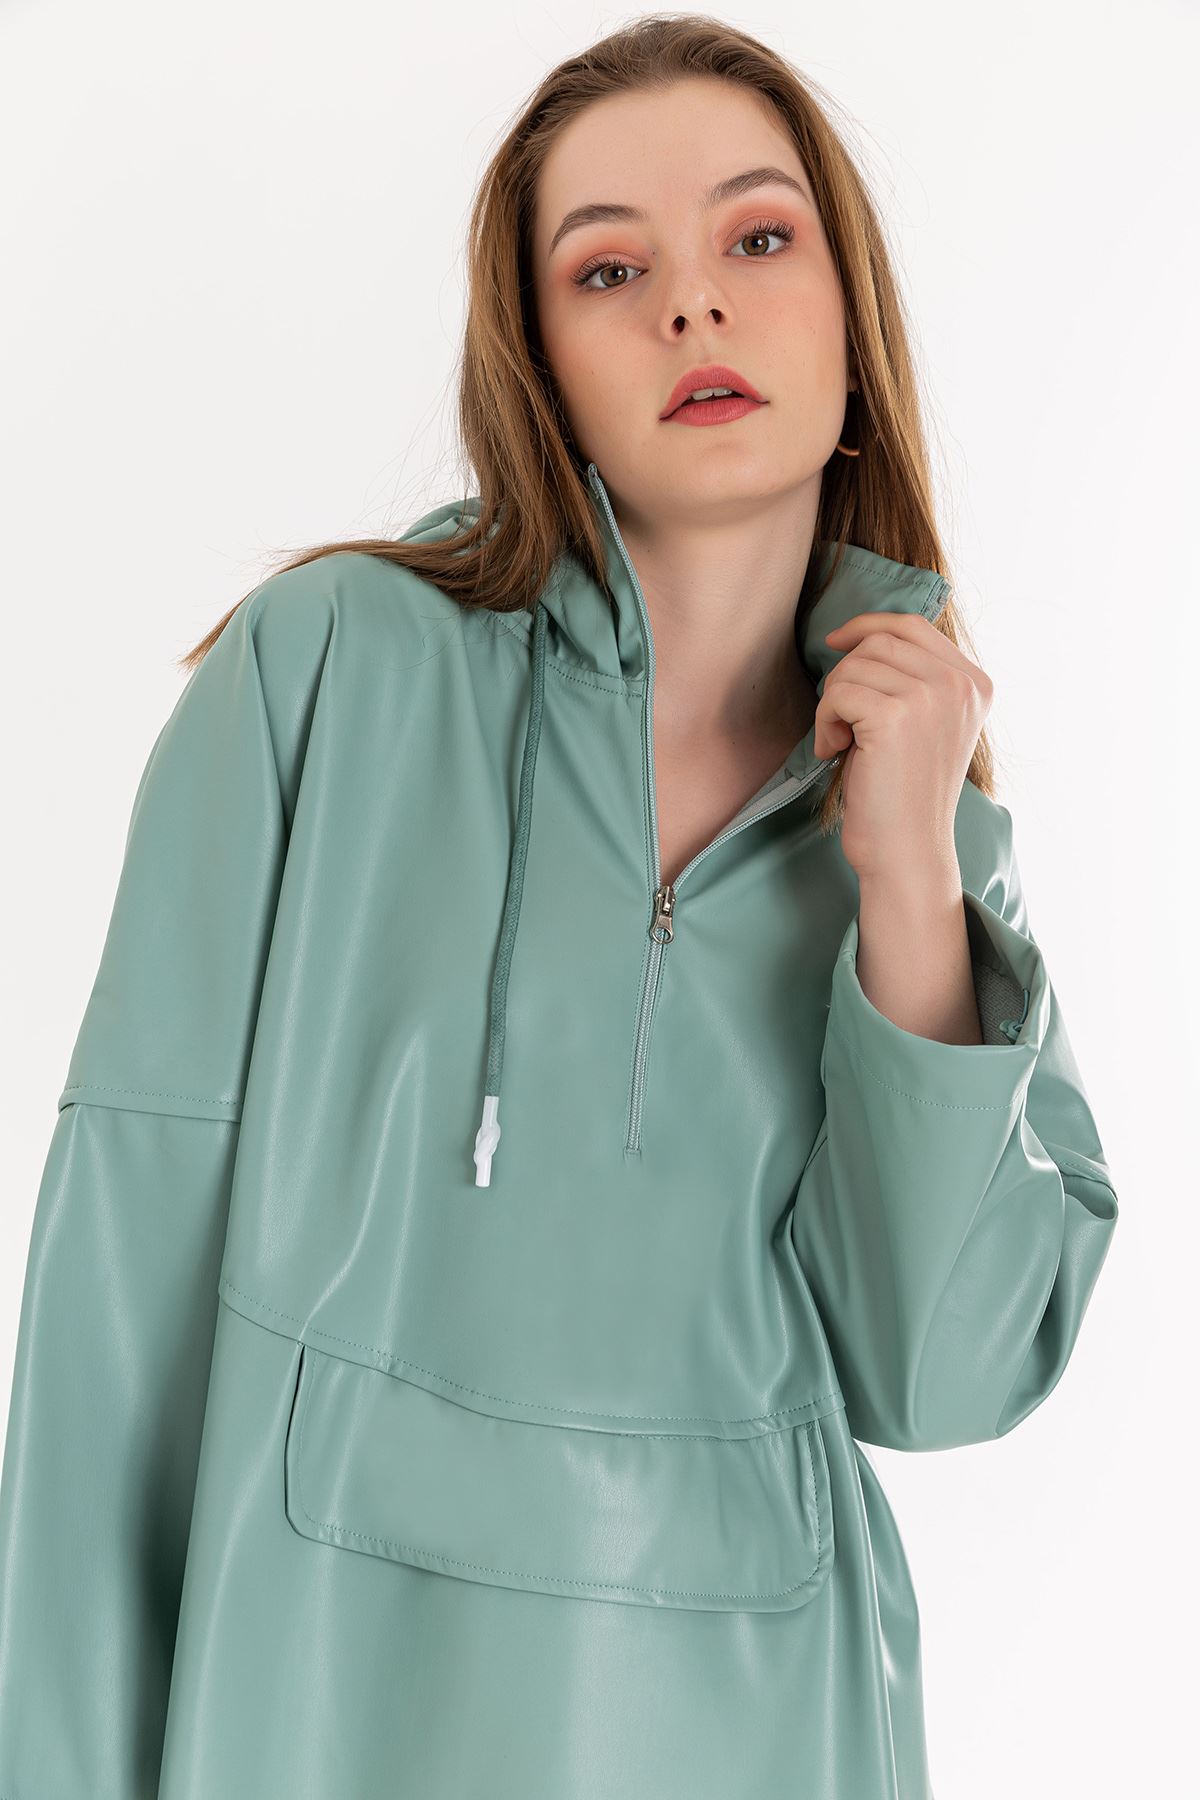 Zara Leather Fabric Long Sleeve Hooded Long Oversize Women Sweatshirt - Mint